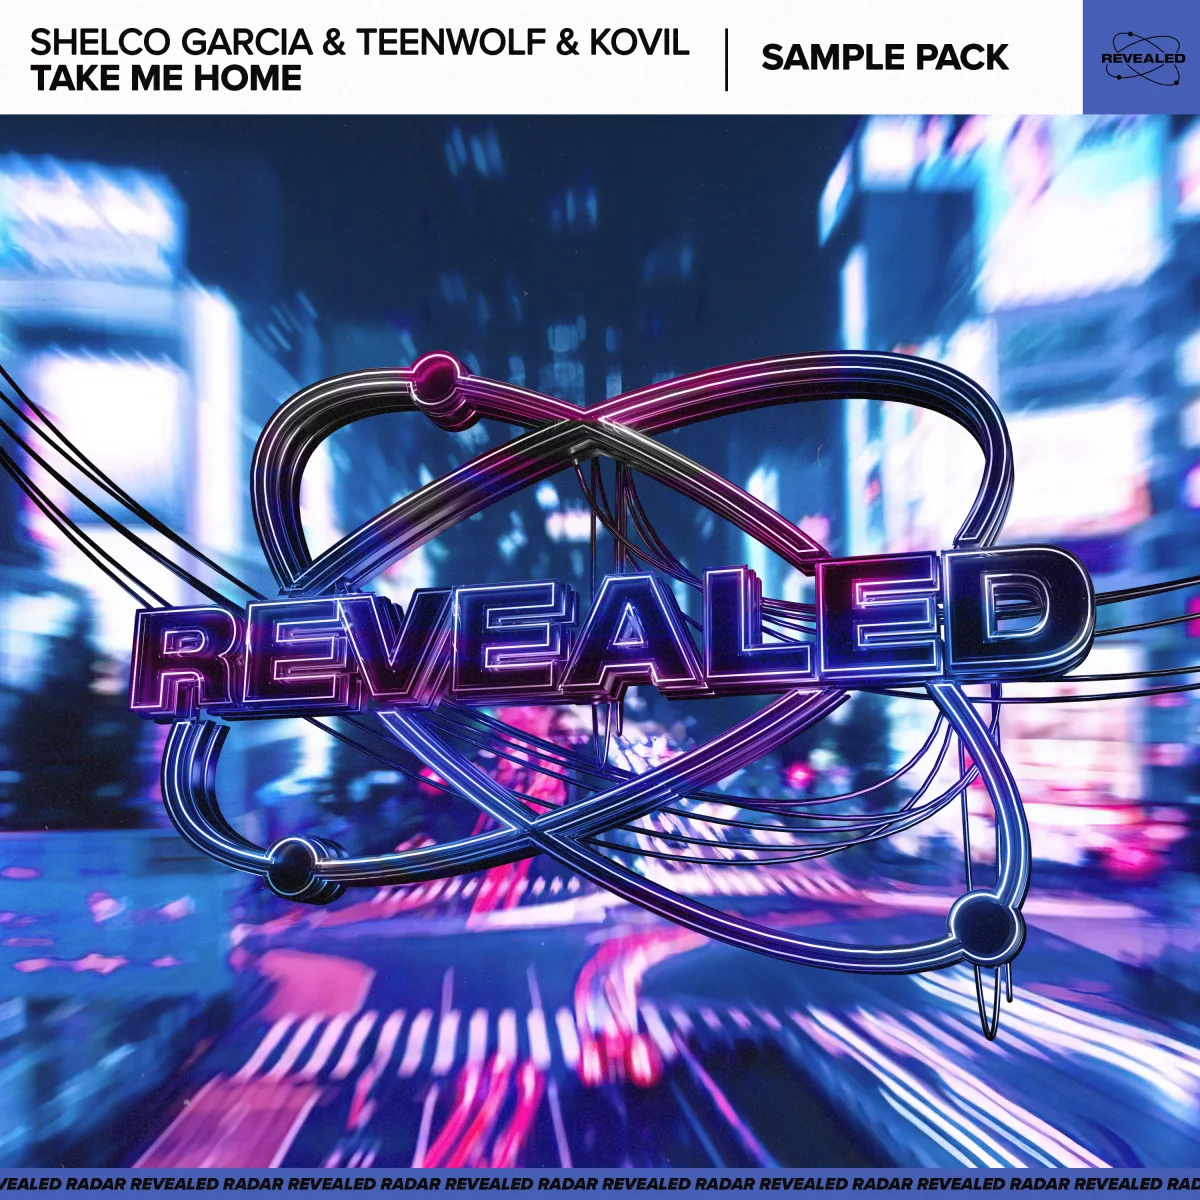 Take Me Home [Sample Pack] - Shelco Garcia & Teenwolf⁠ Kovil⁠ 